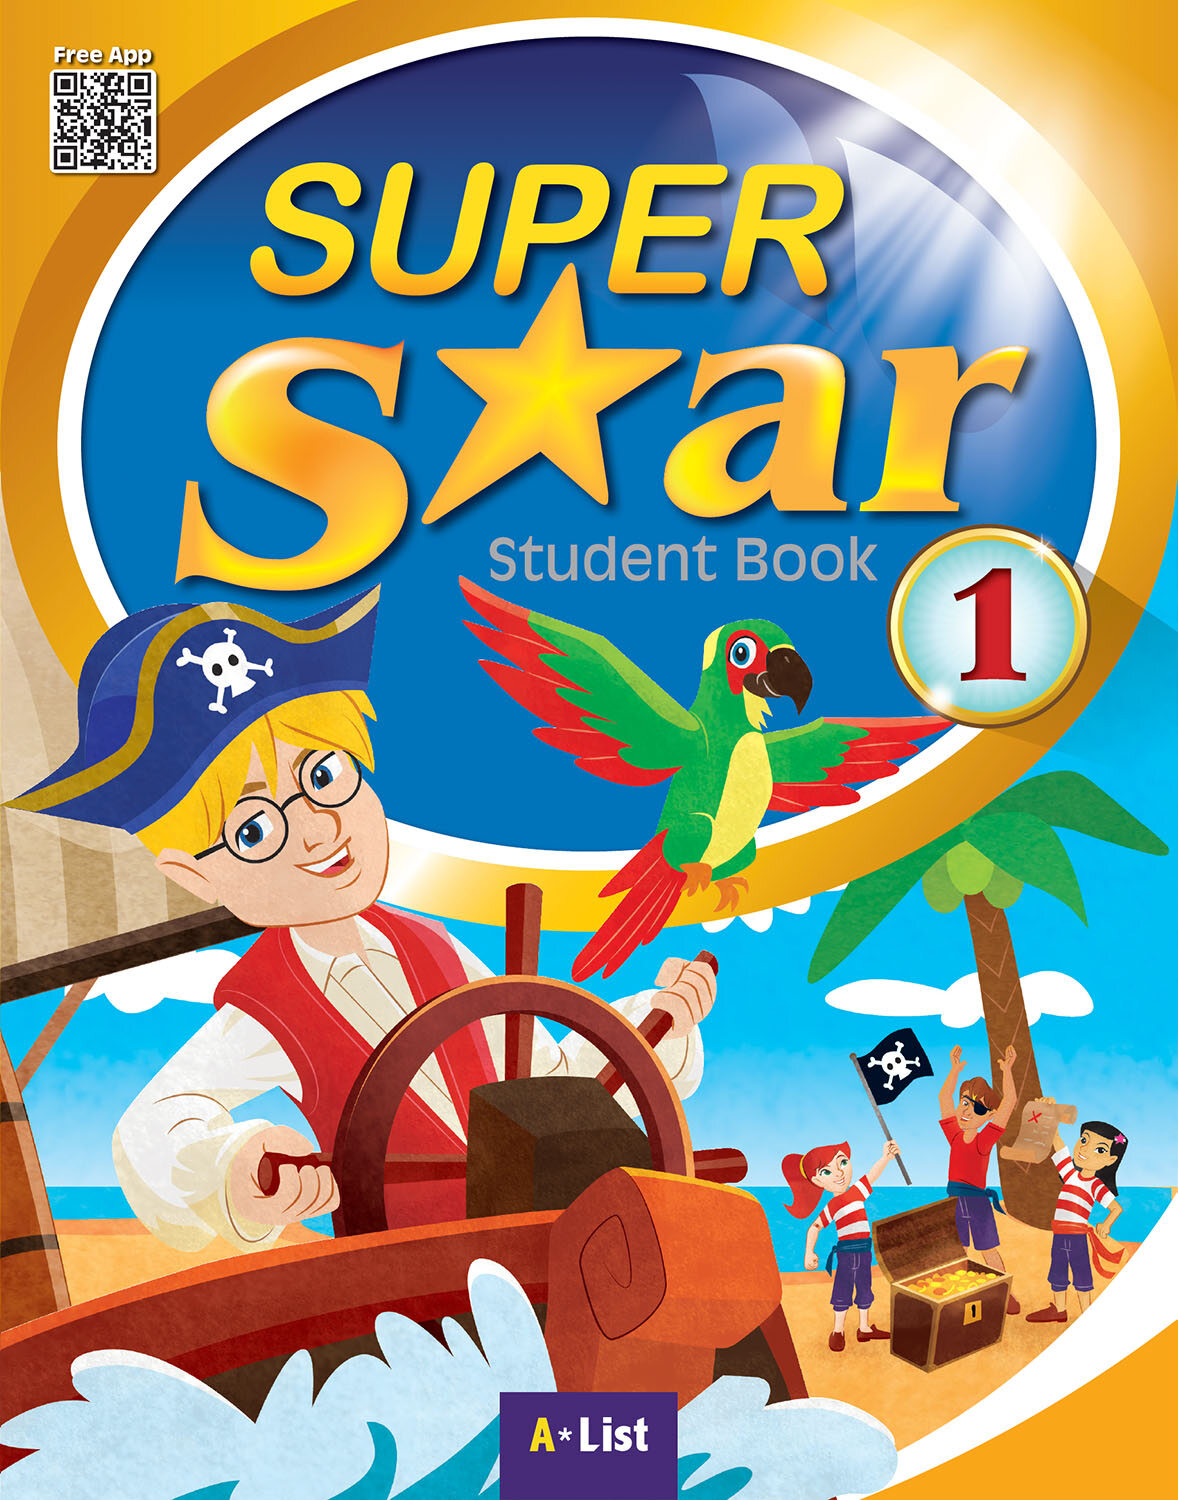 Super Star 1 : Student Book (Paperback + App)